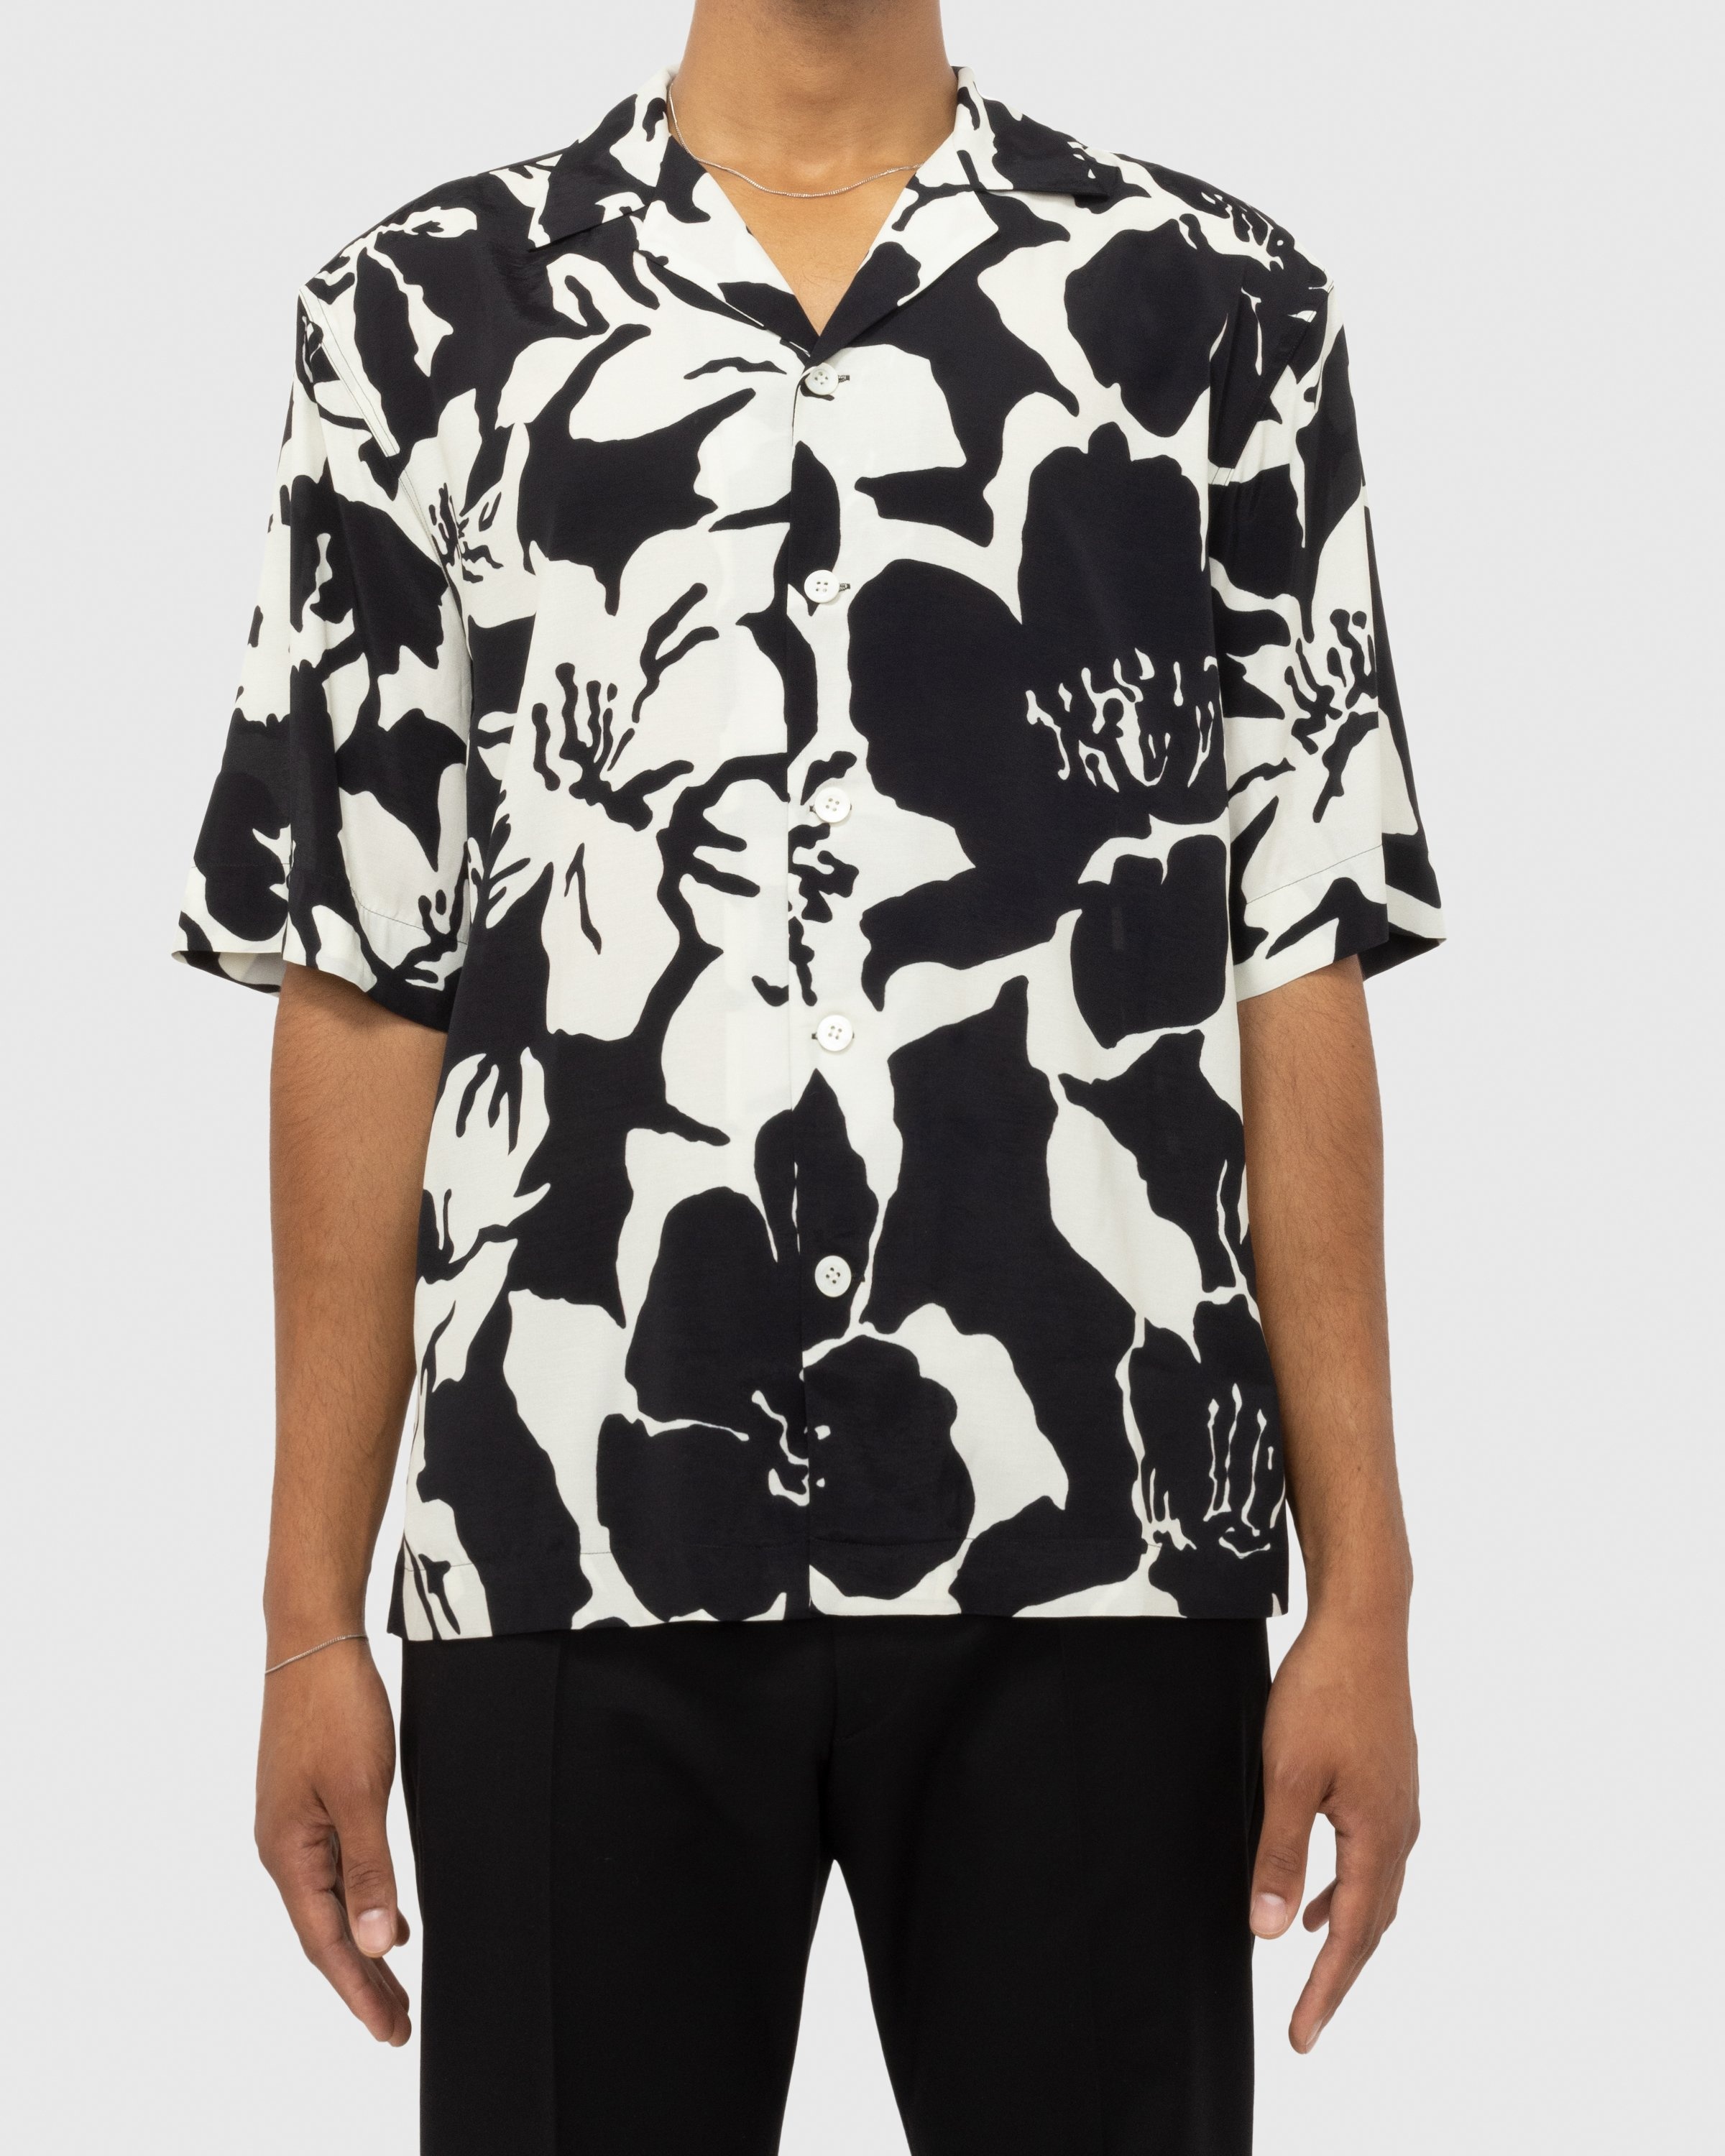 Dries van Noten – Floral Cassi Shirt Multi - Shirts - Multi - Image 2